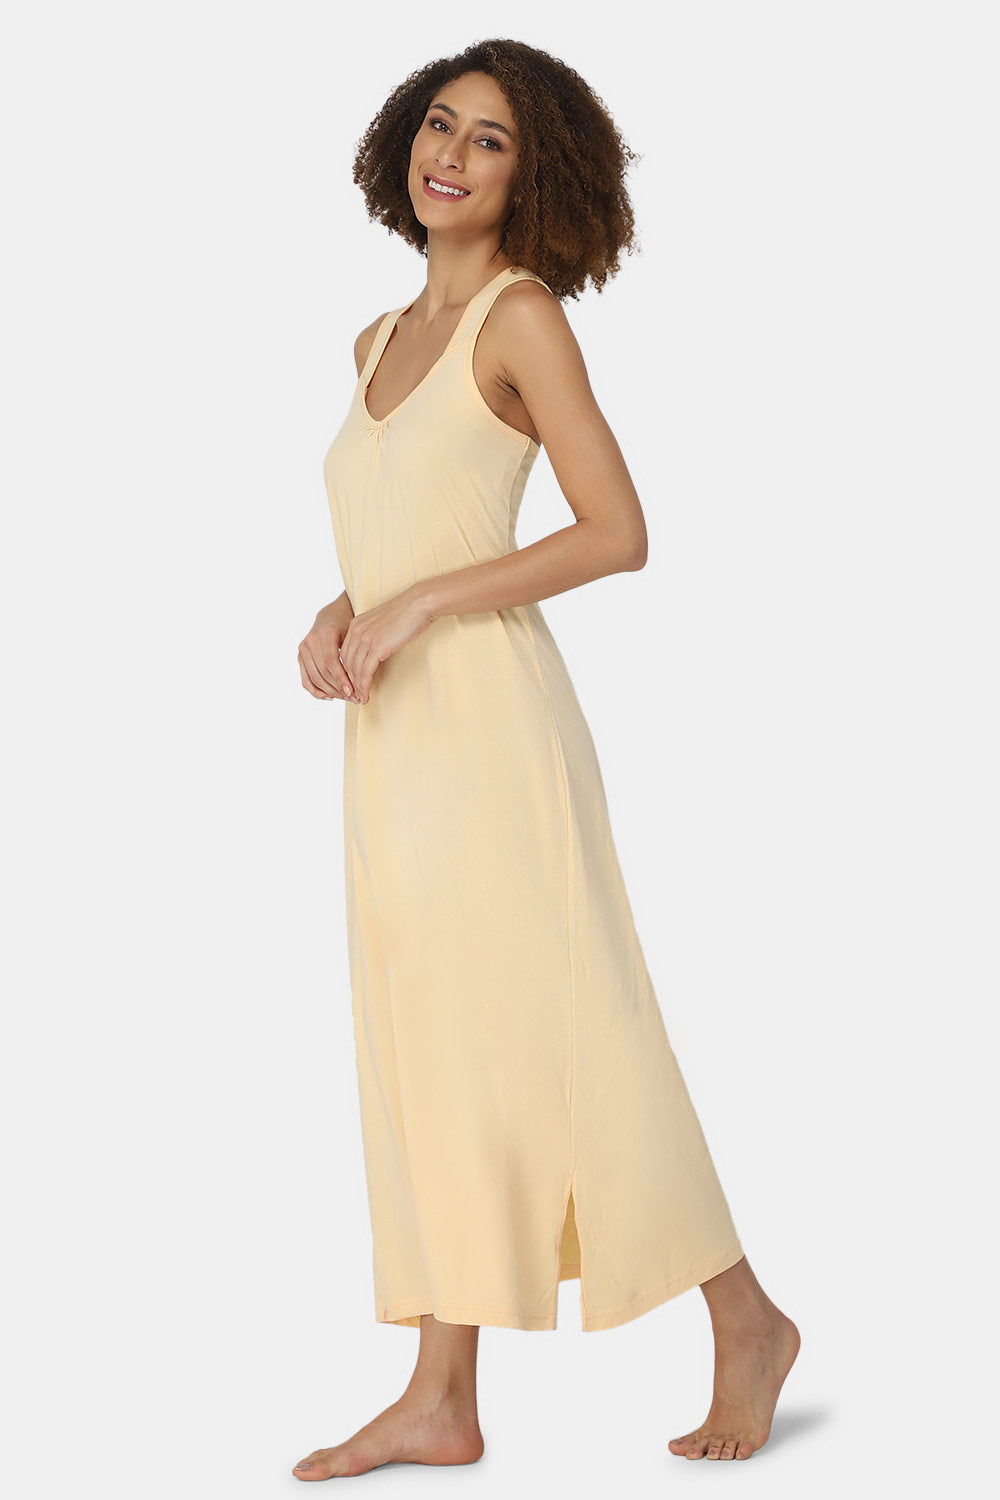 Bedtime Dress For Women | Buy Nightgown For Women | Maxim Creation